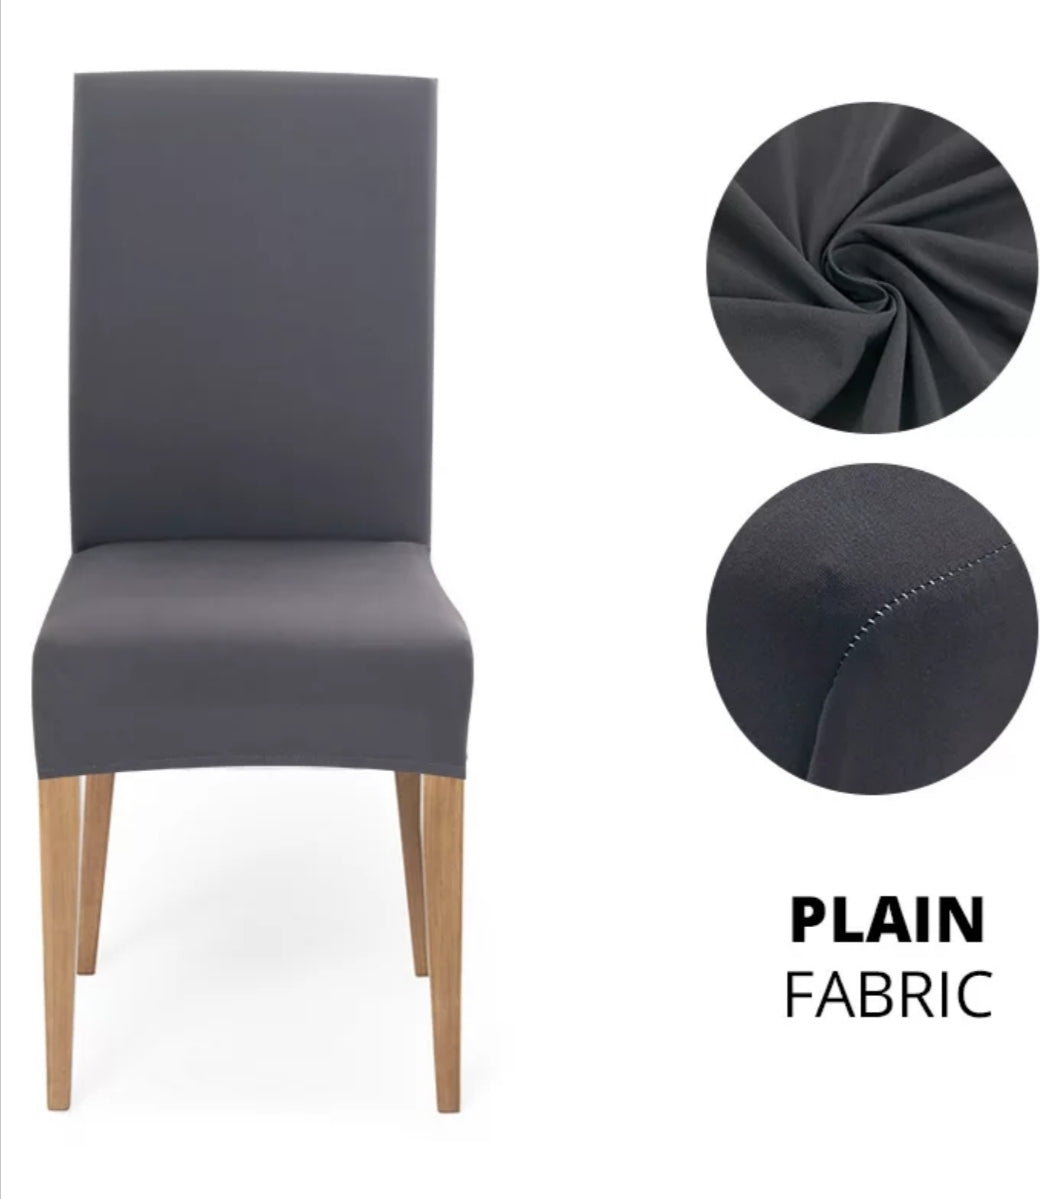 Elastic stool covers matt smooth surface